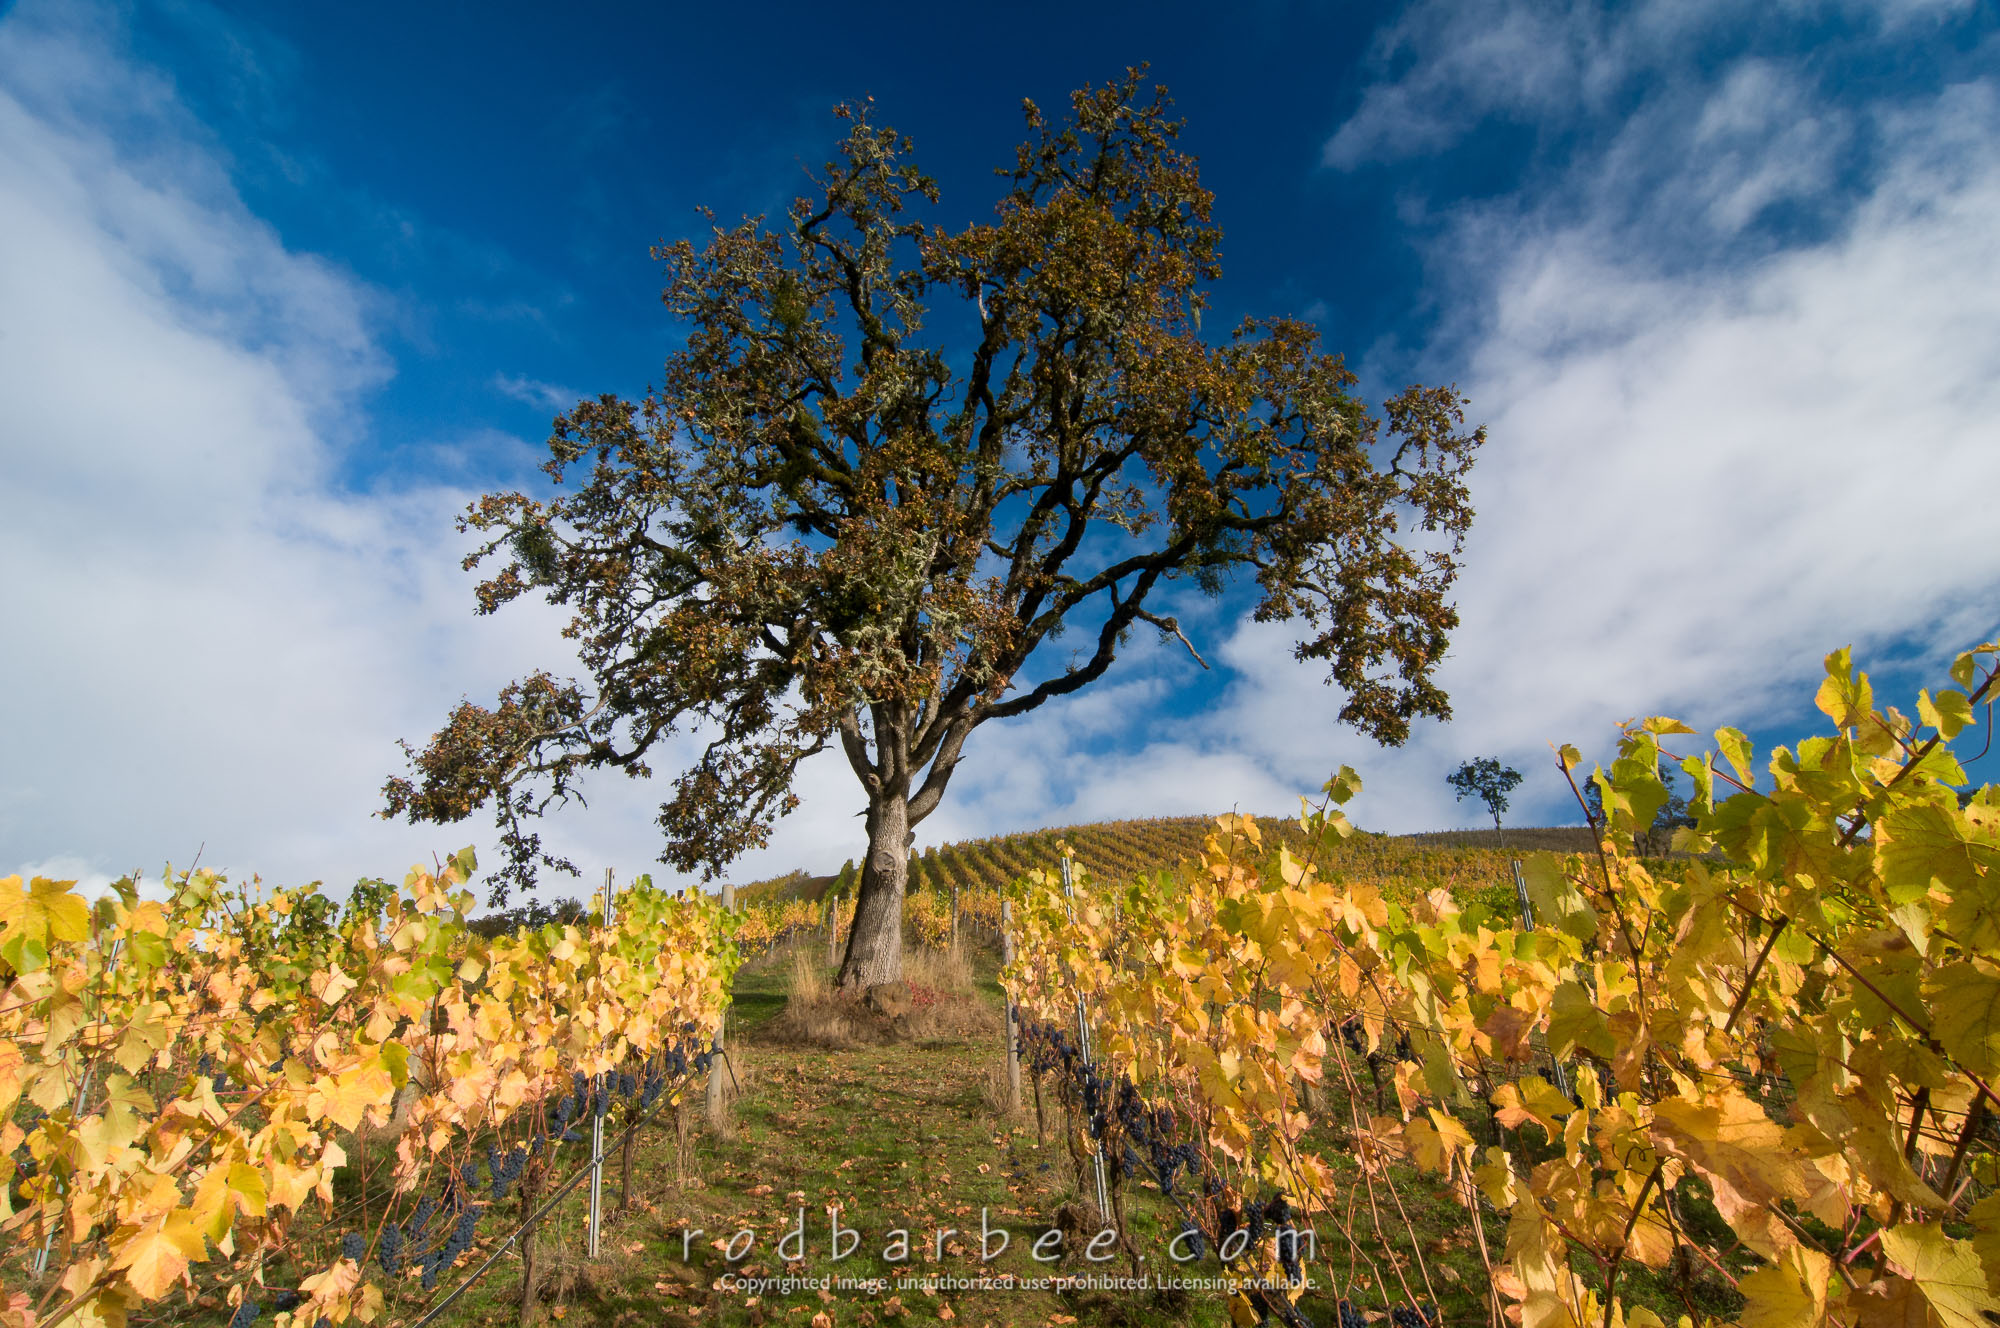 Barbee_111022_3_4229-Edit |  Lone tree in the vineyard at Maysara Winery